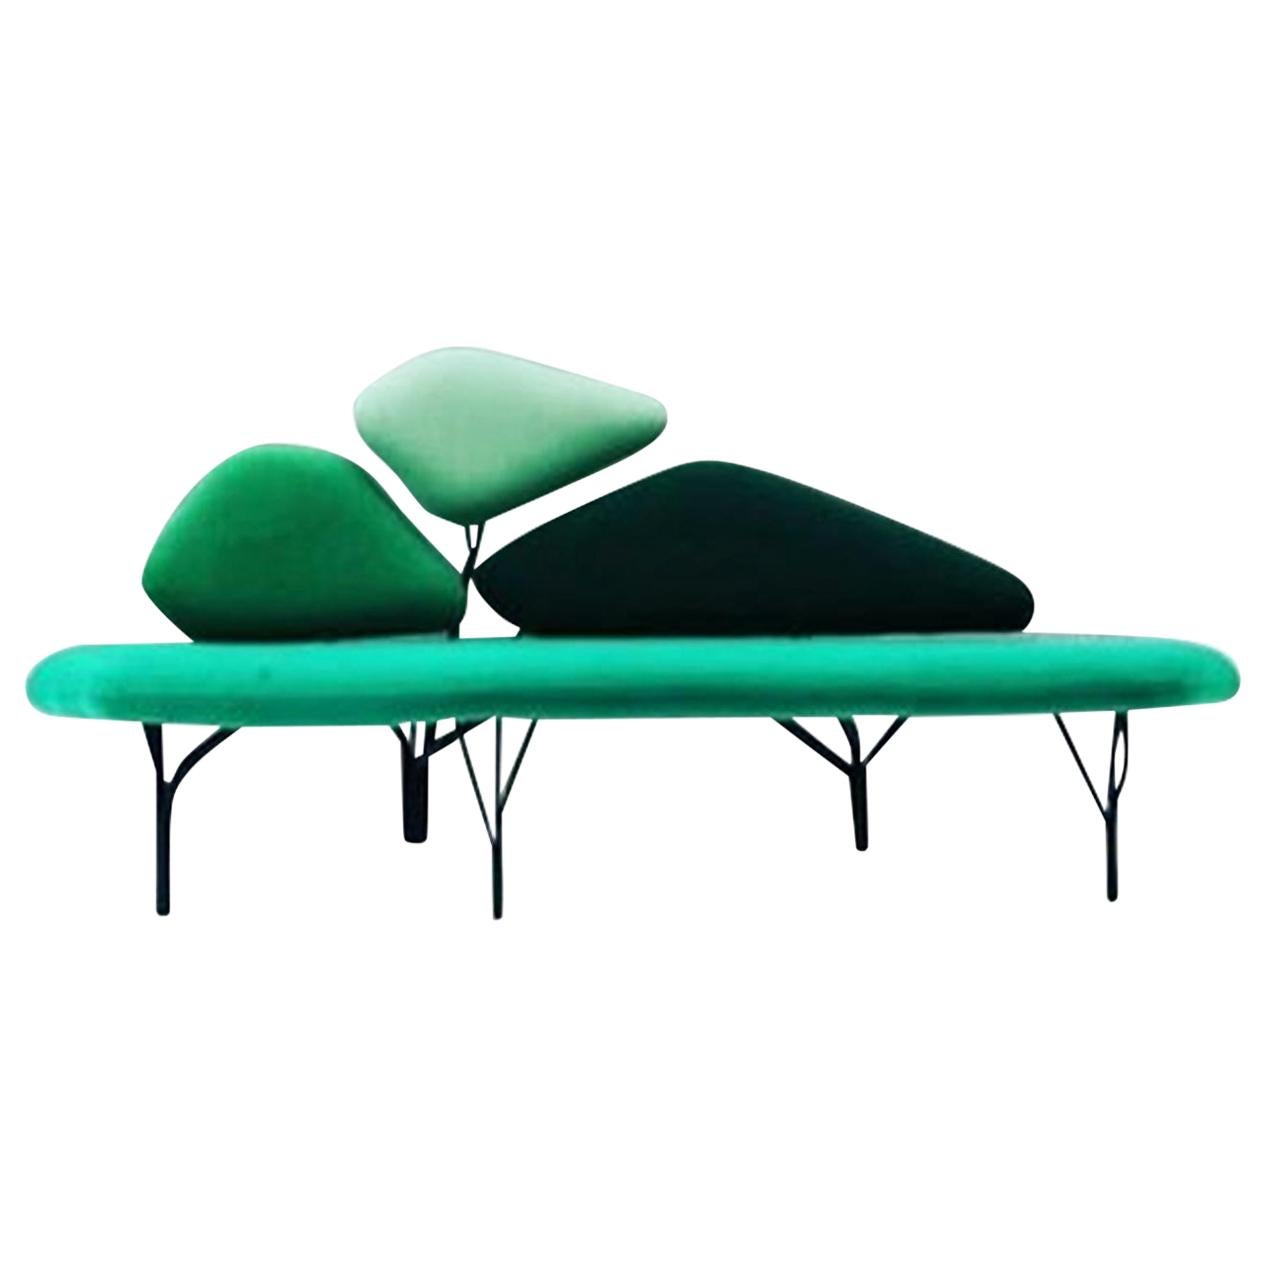 Green Borghese Sofa, Noé Duchaufour Lawrance For Sale